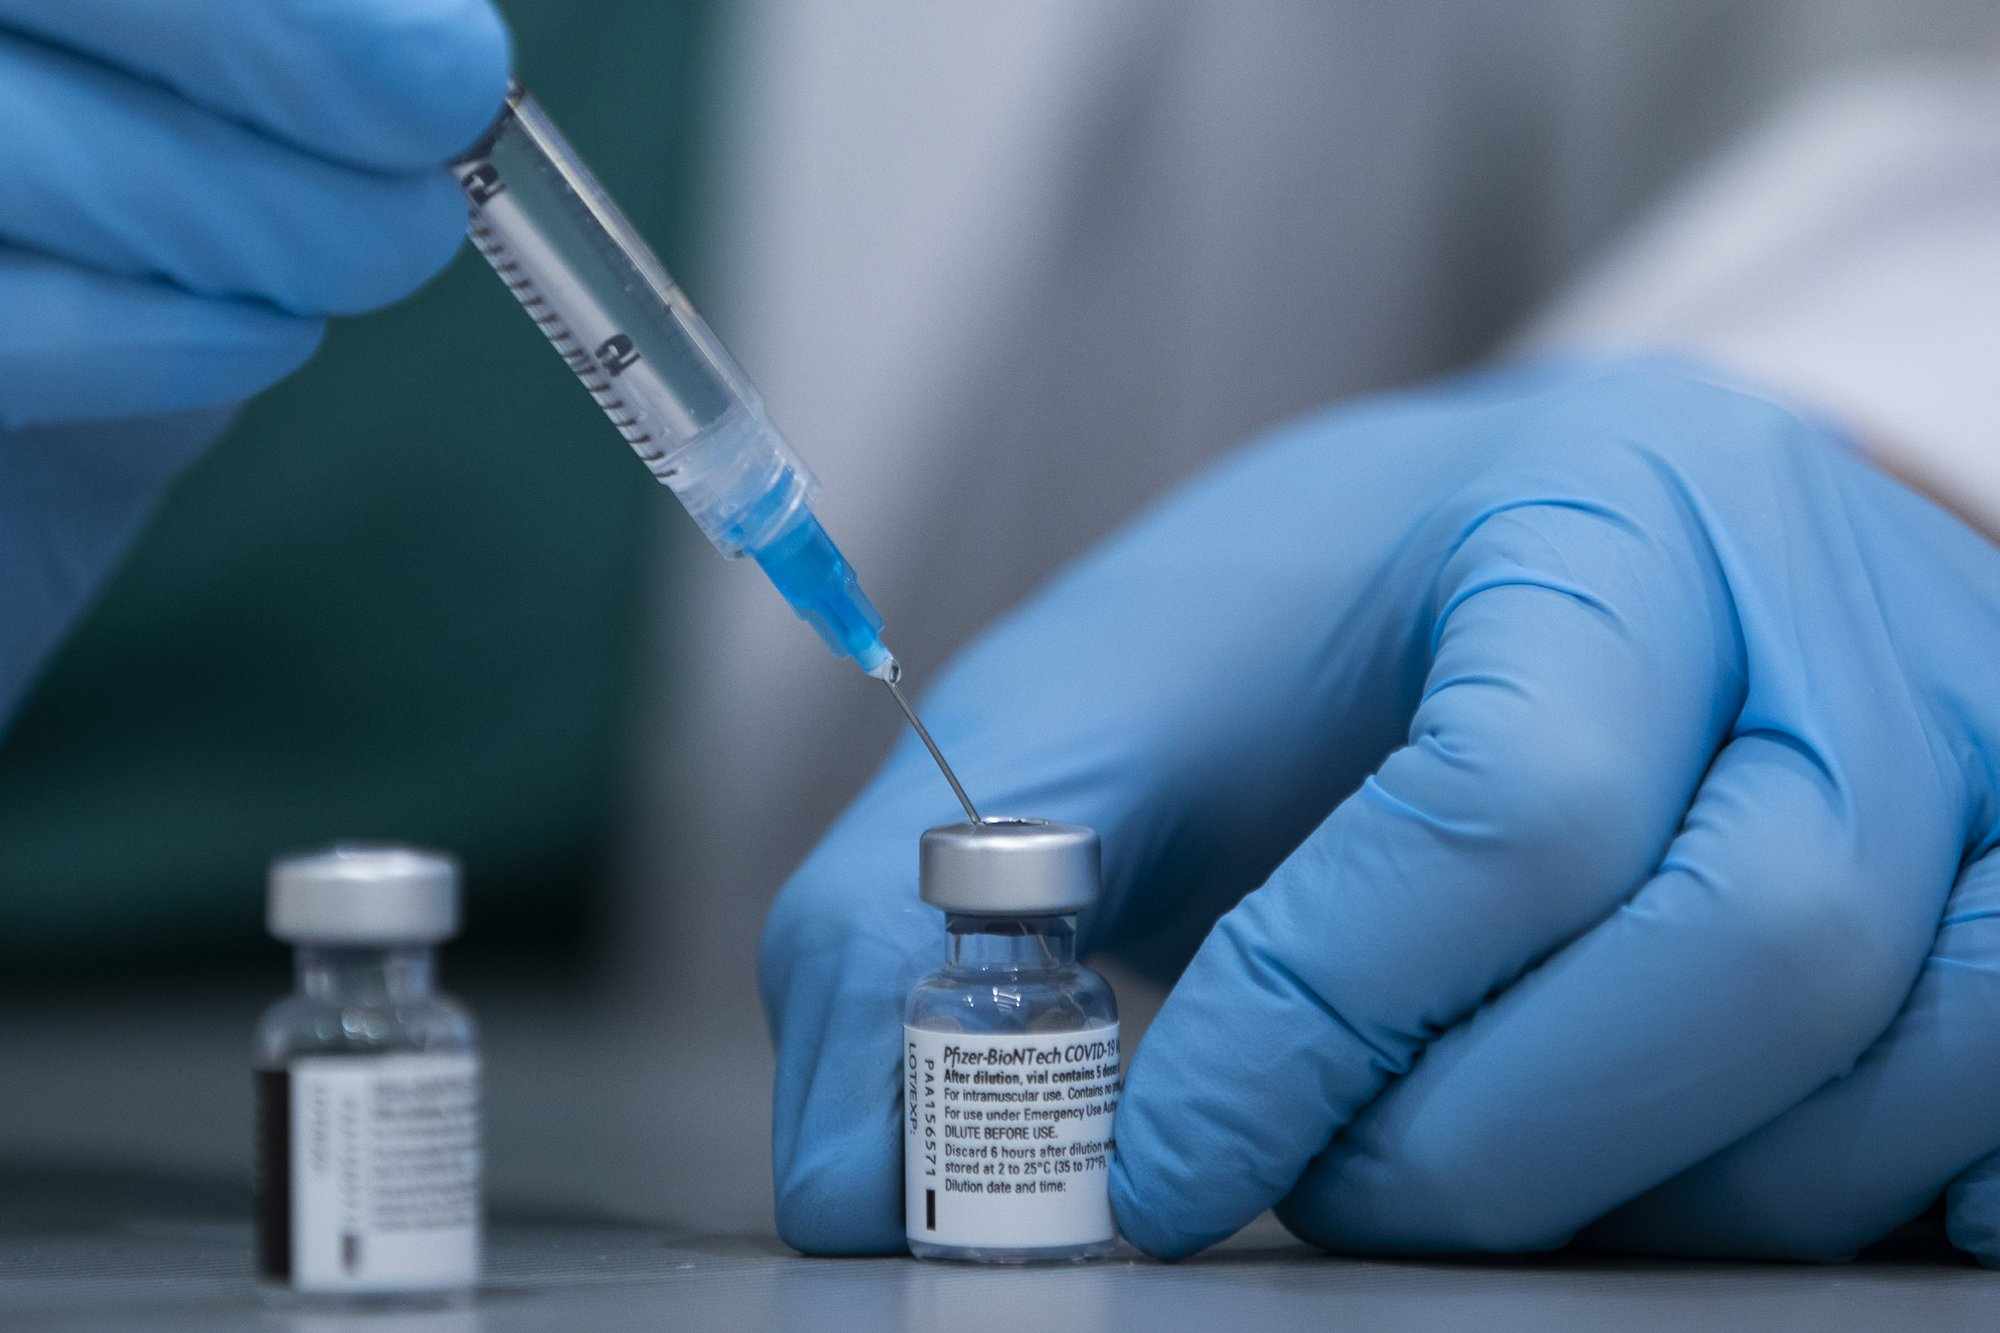 israel palestinians coronavirus vaccines transfer